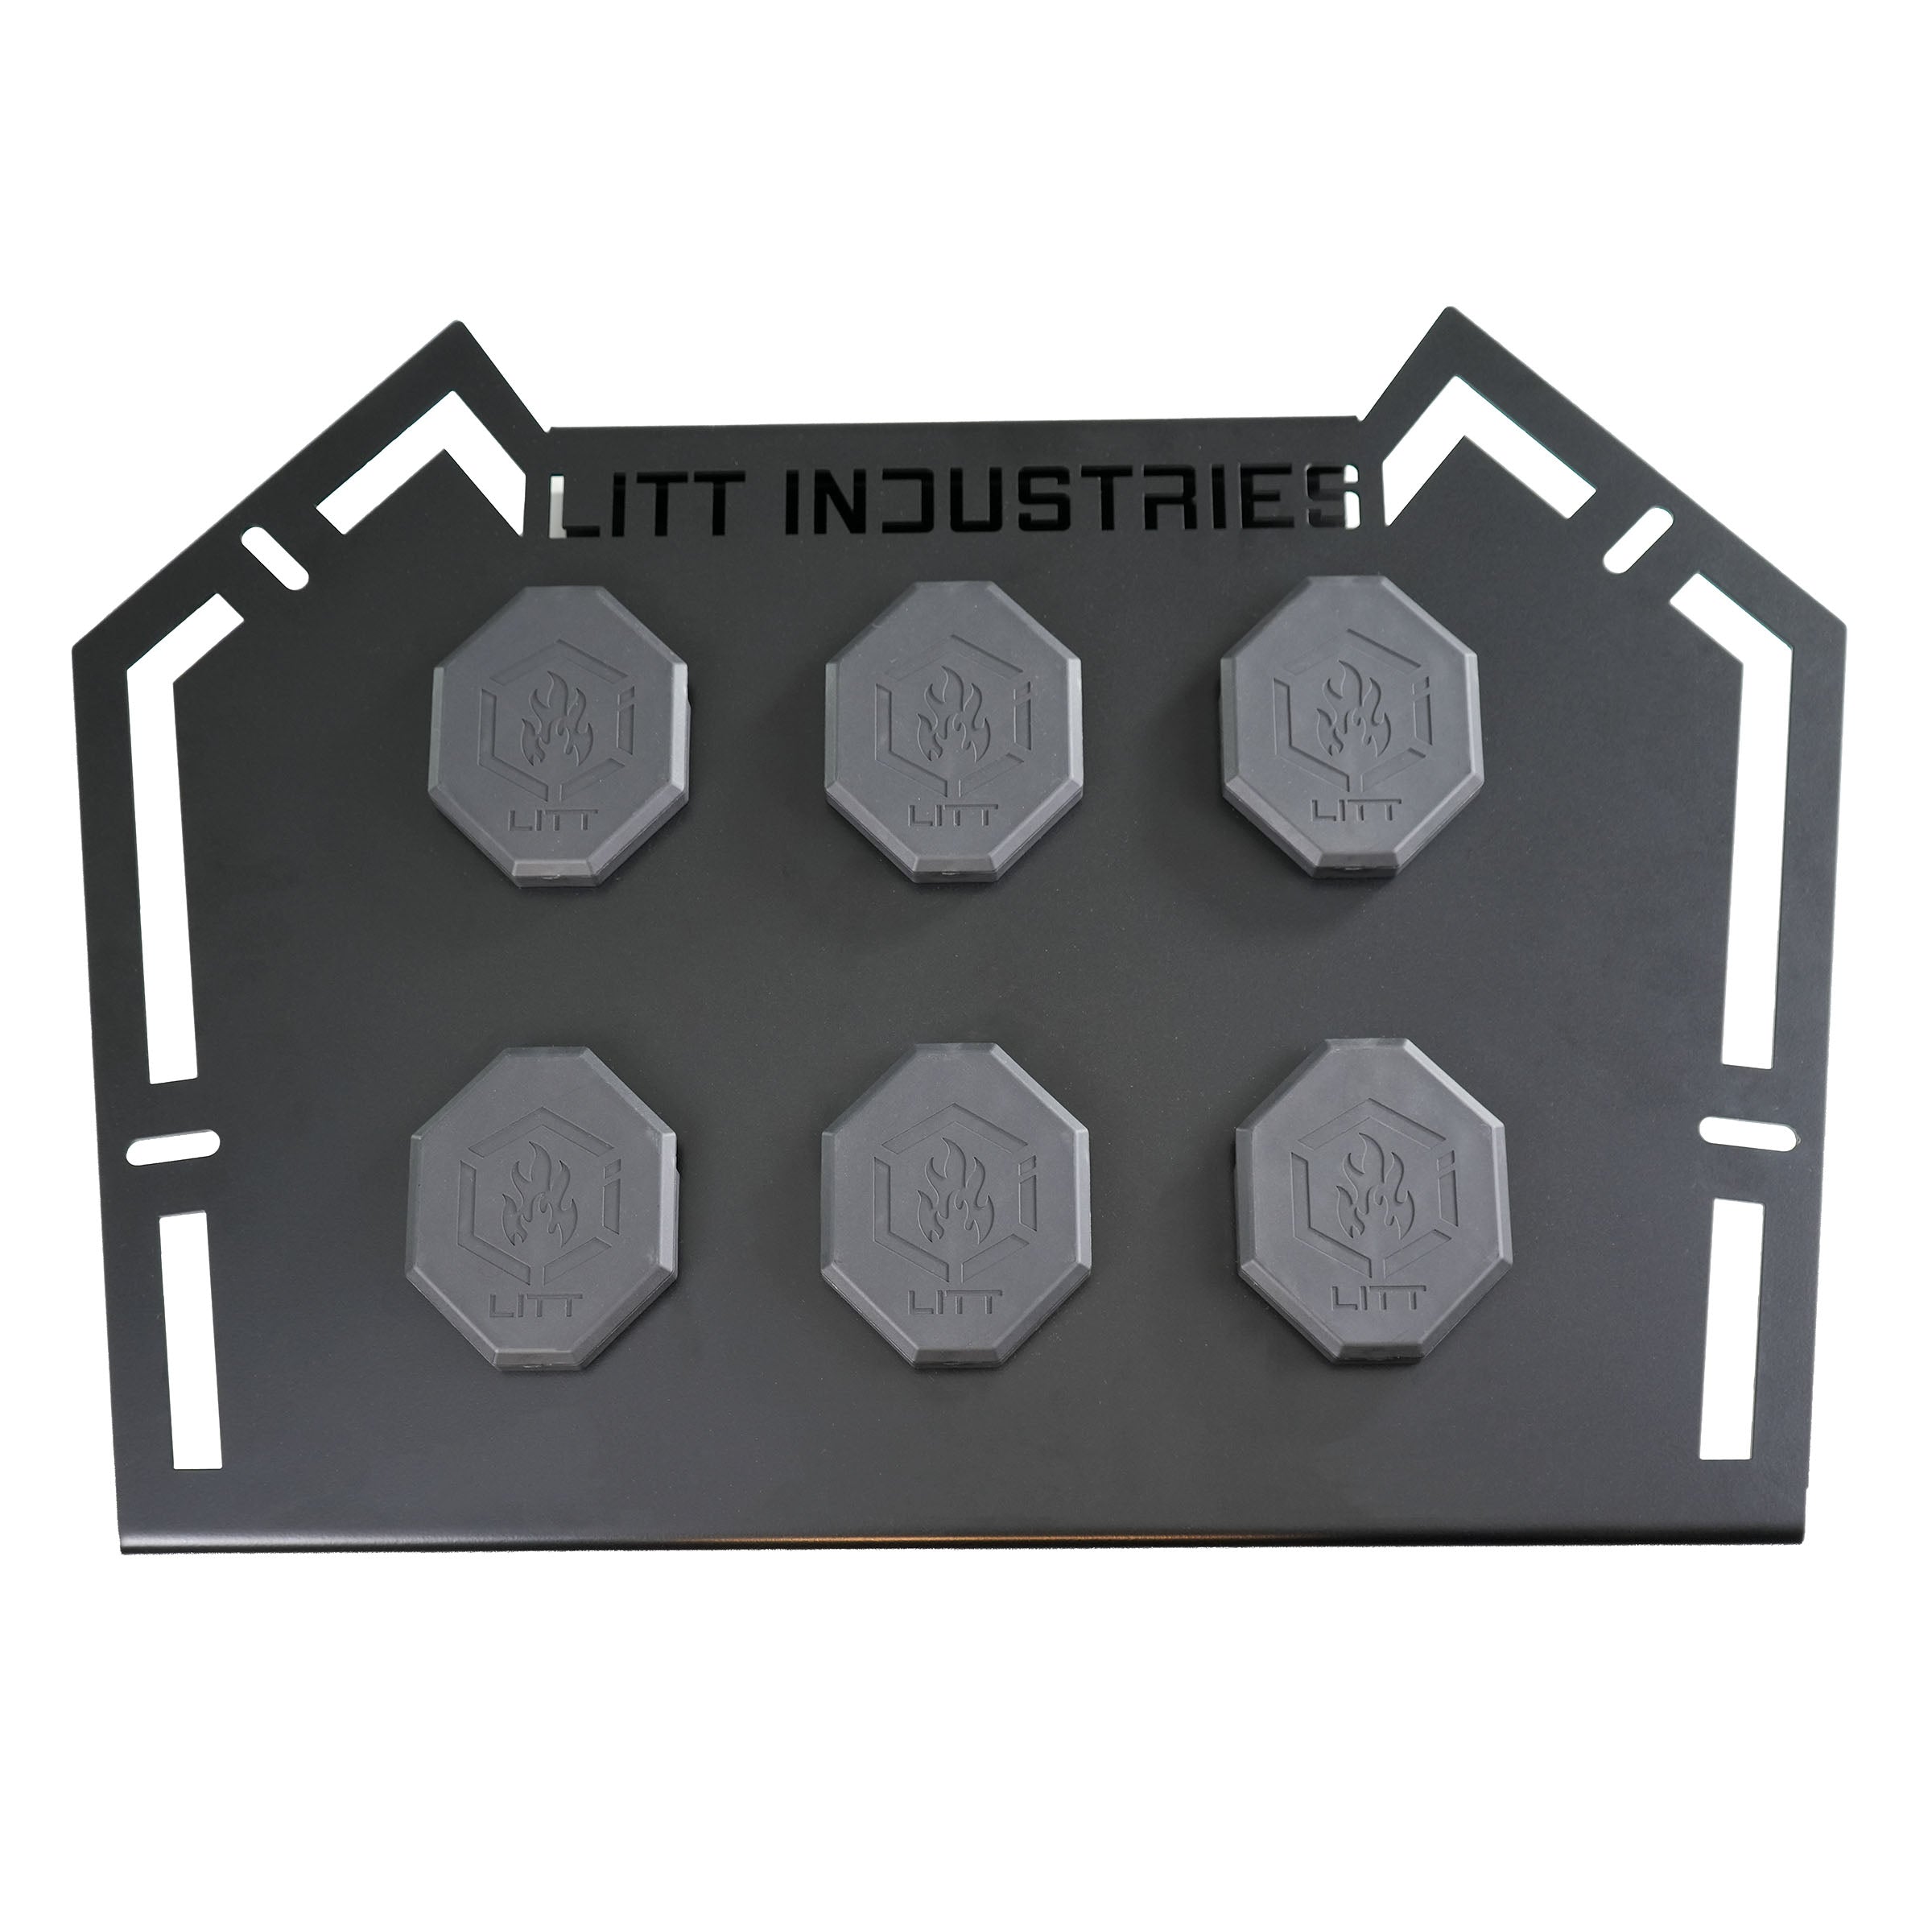 Litt Industries heavy duty ryobi packout mount for polaris rzr pro xp the best toolbox mount on the market